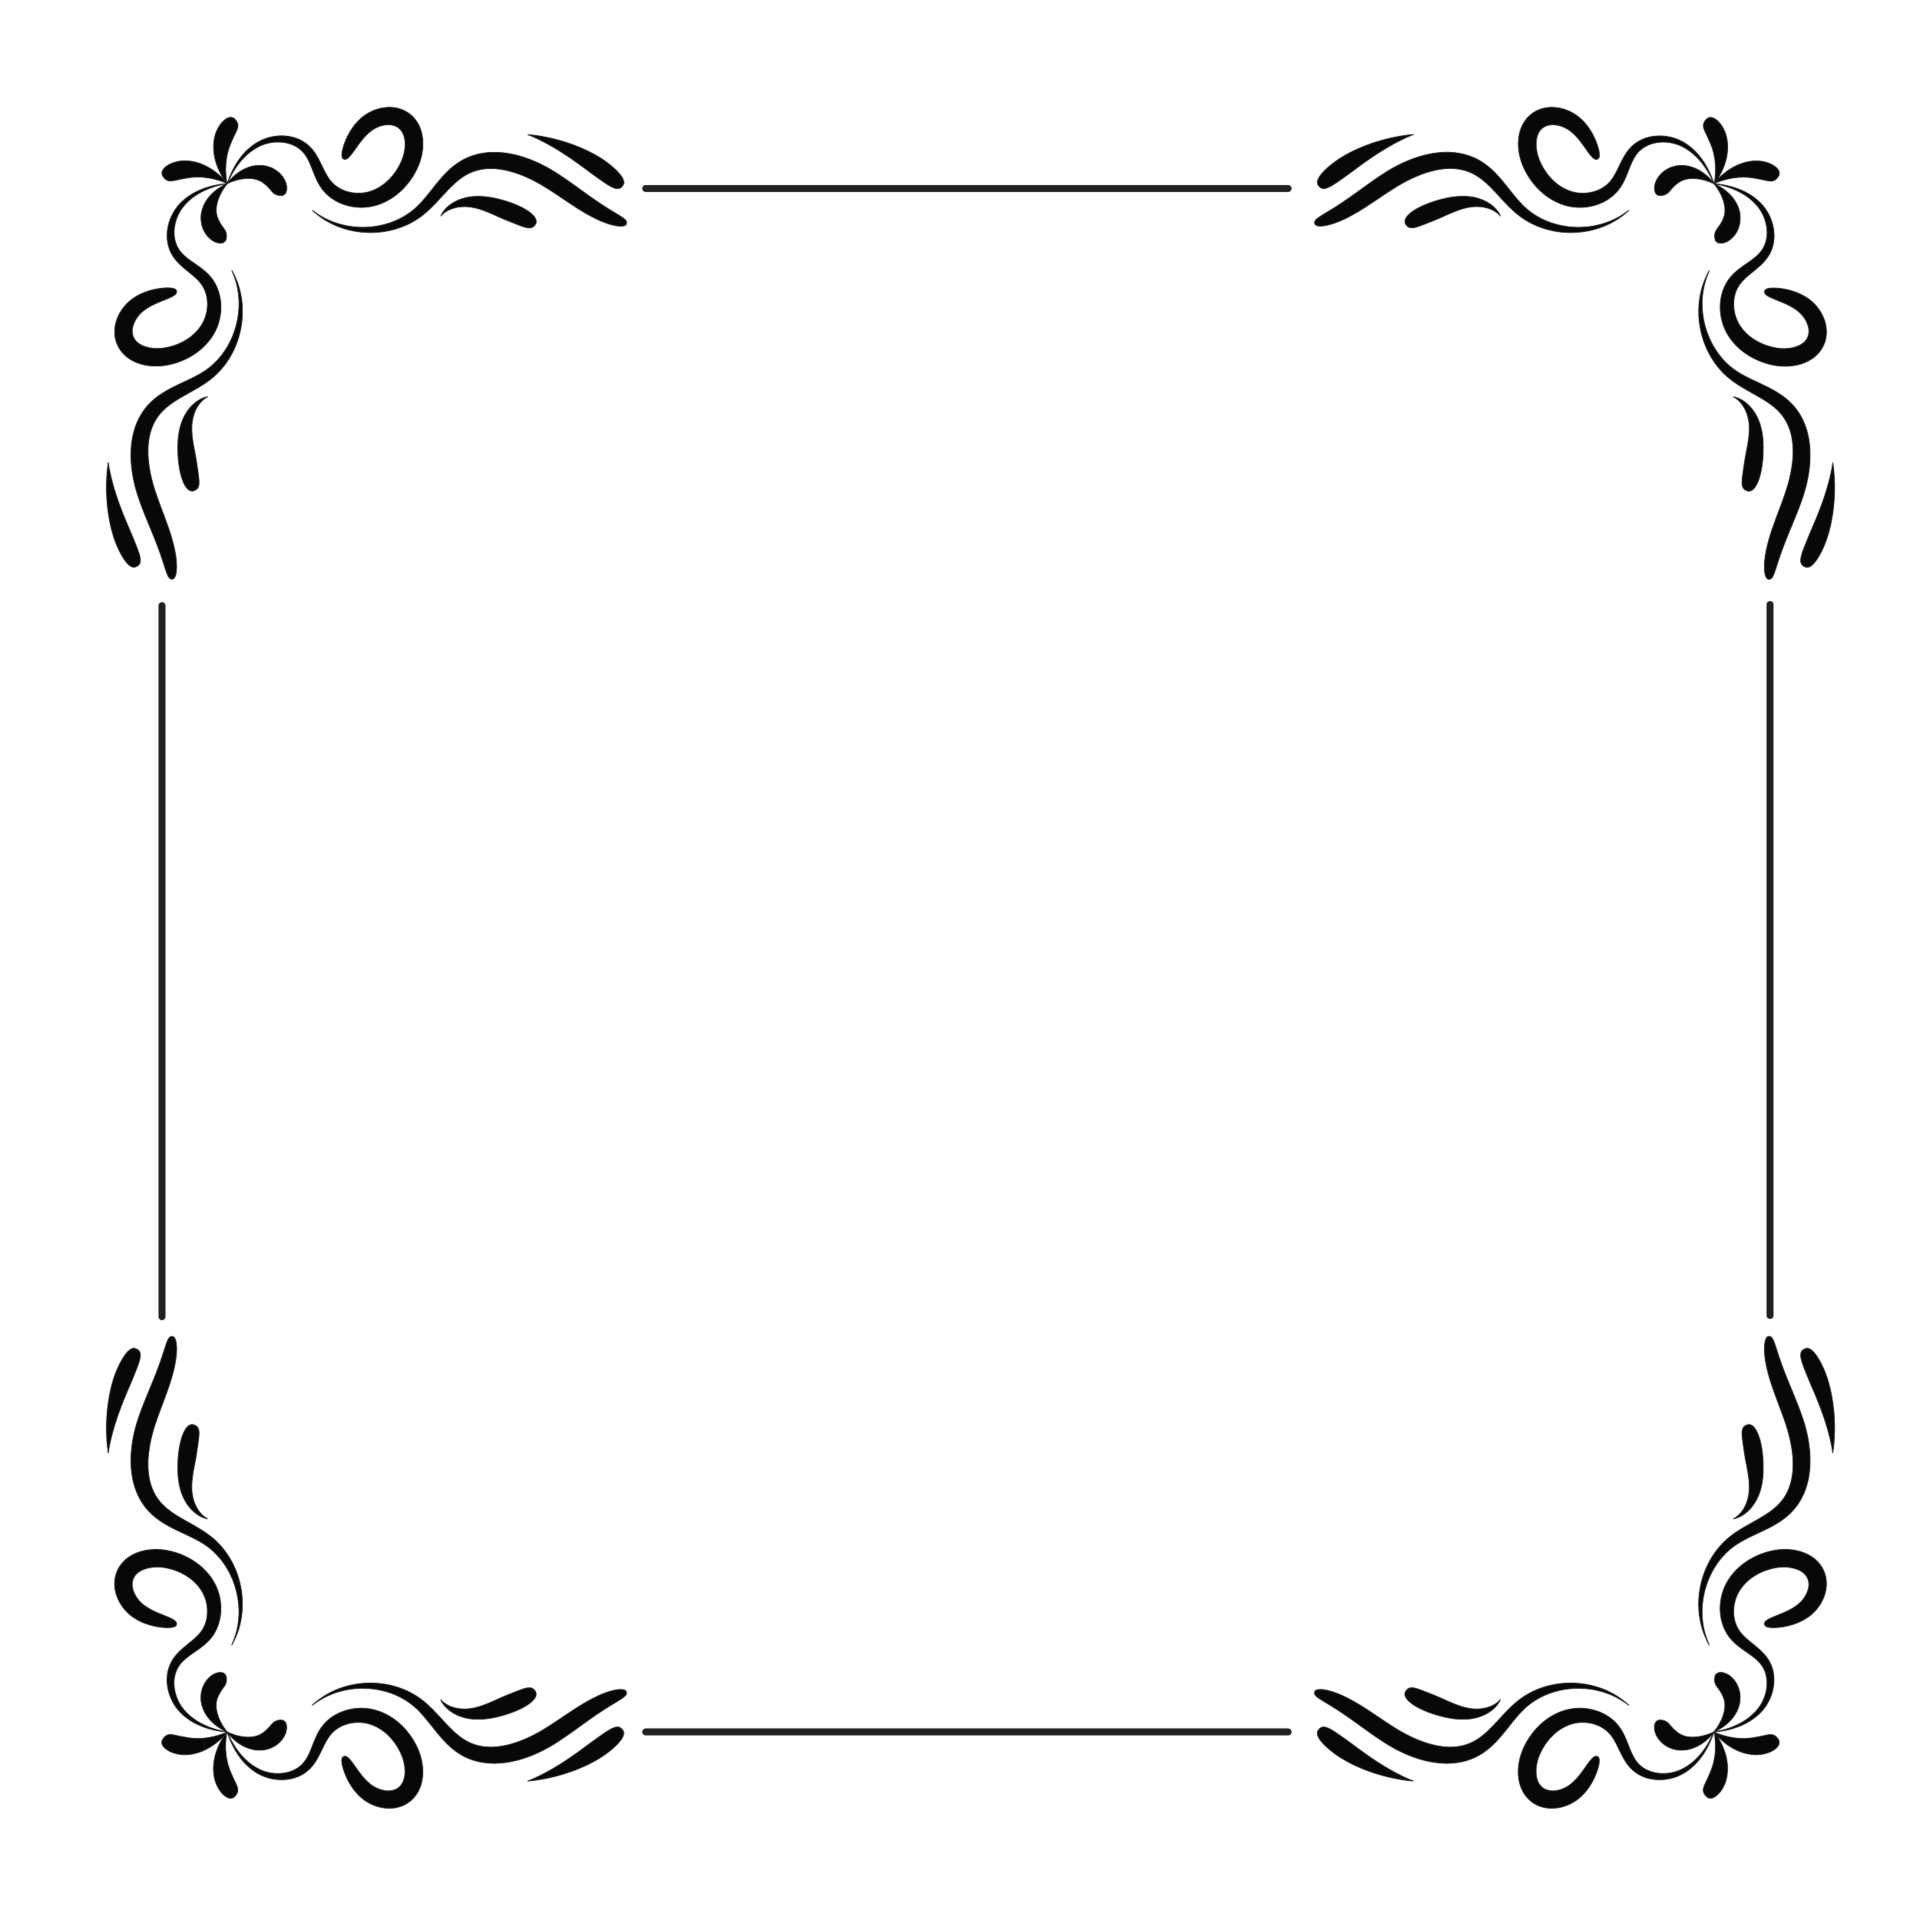 Islamic border frame transparent in black 26795298 PNG